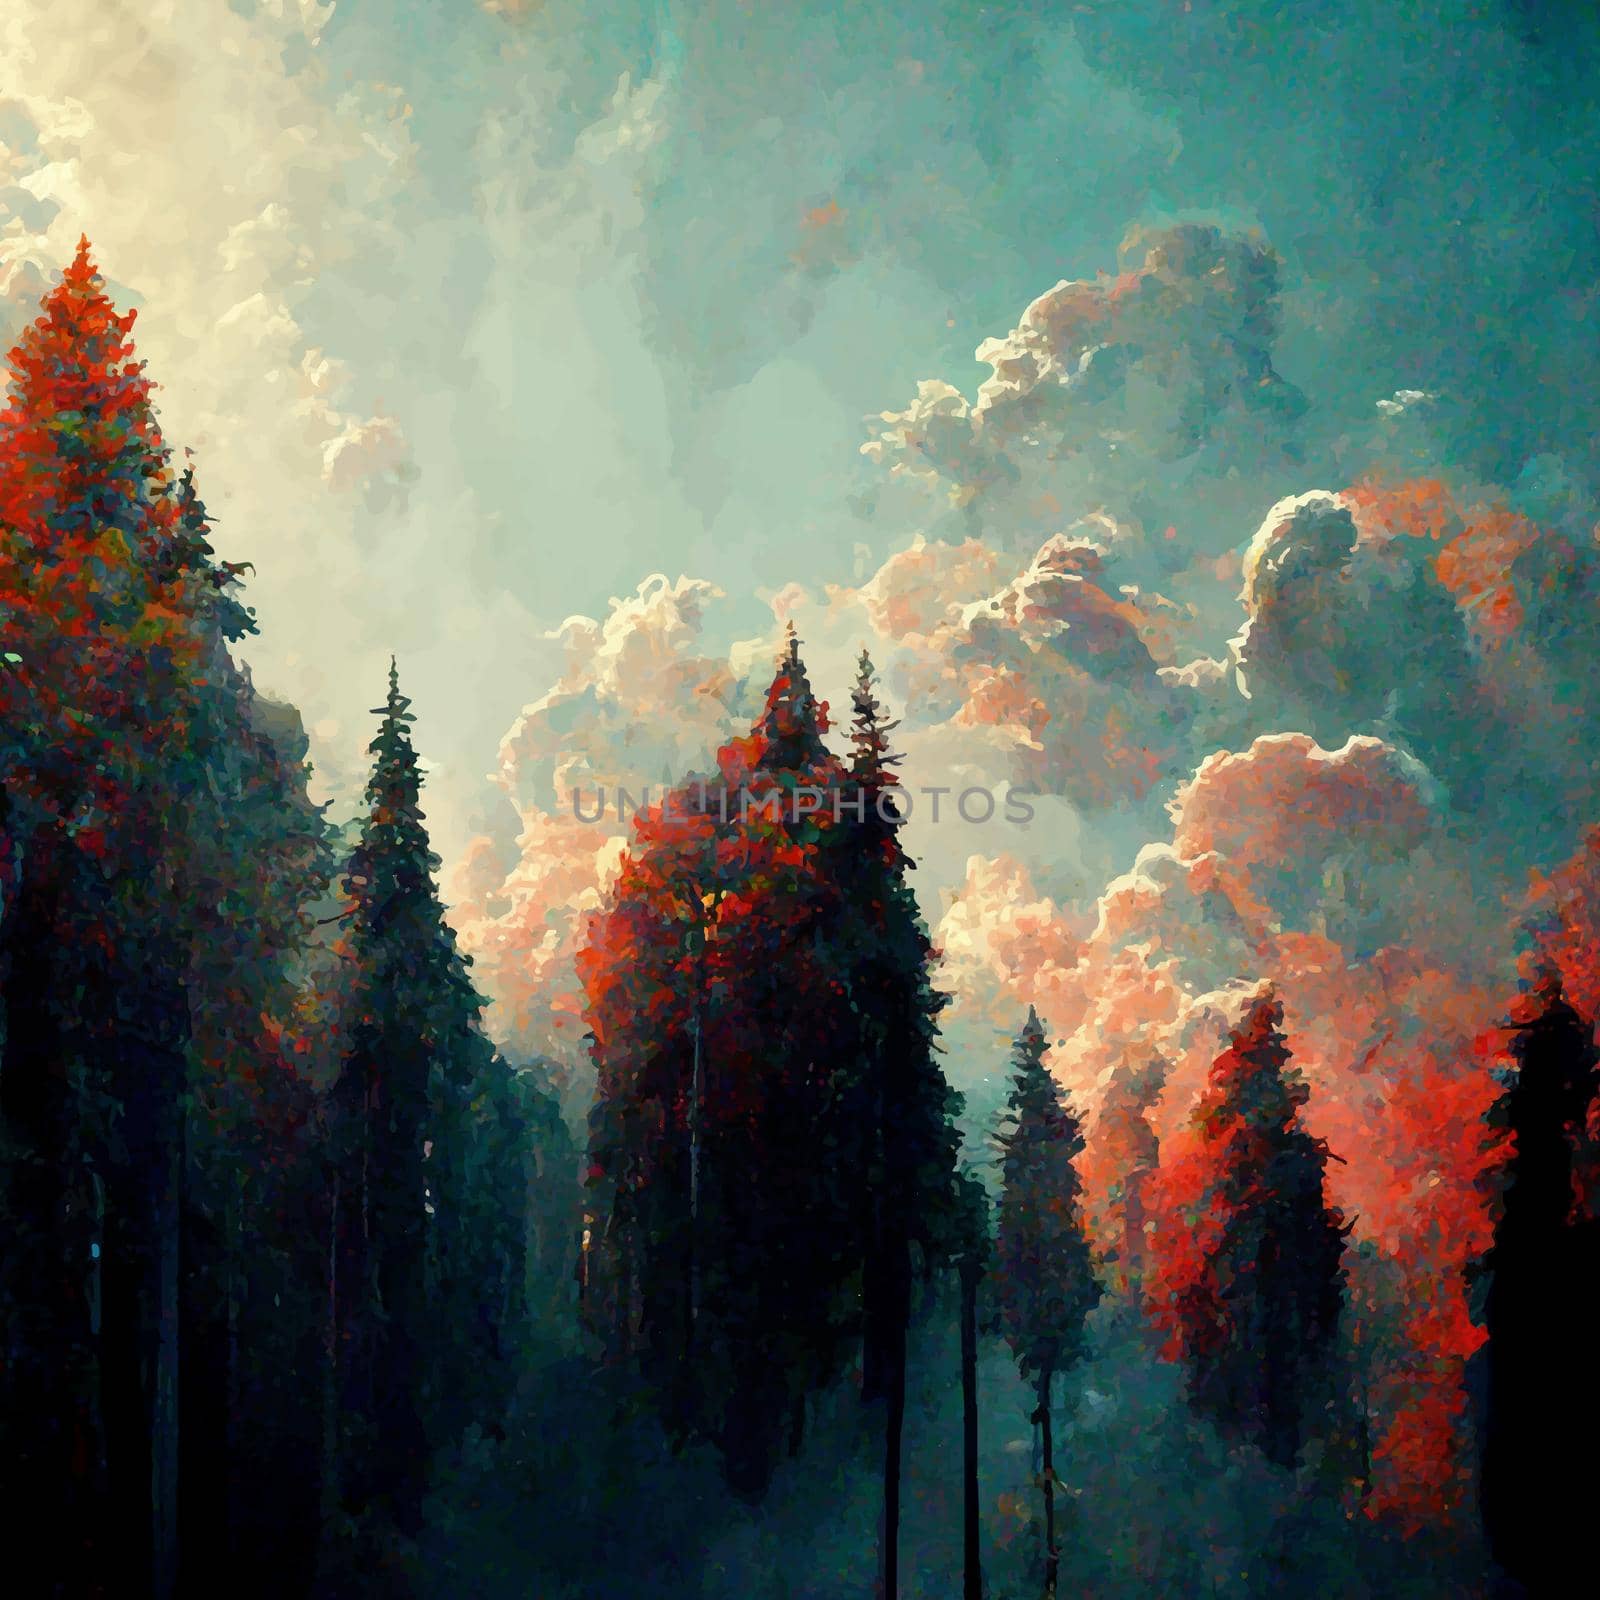 forest in autumn beautiful landscape geometric illustration. illustration for wallpaper